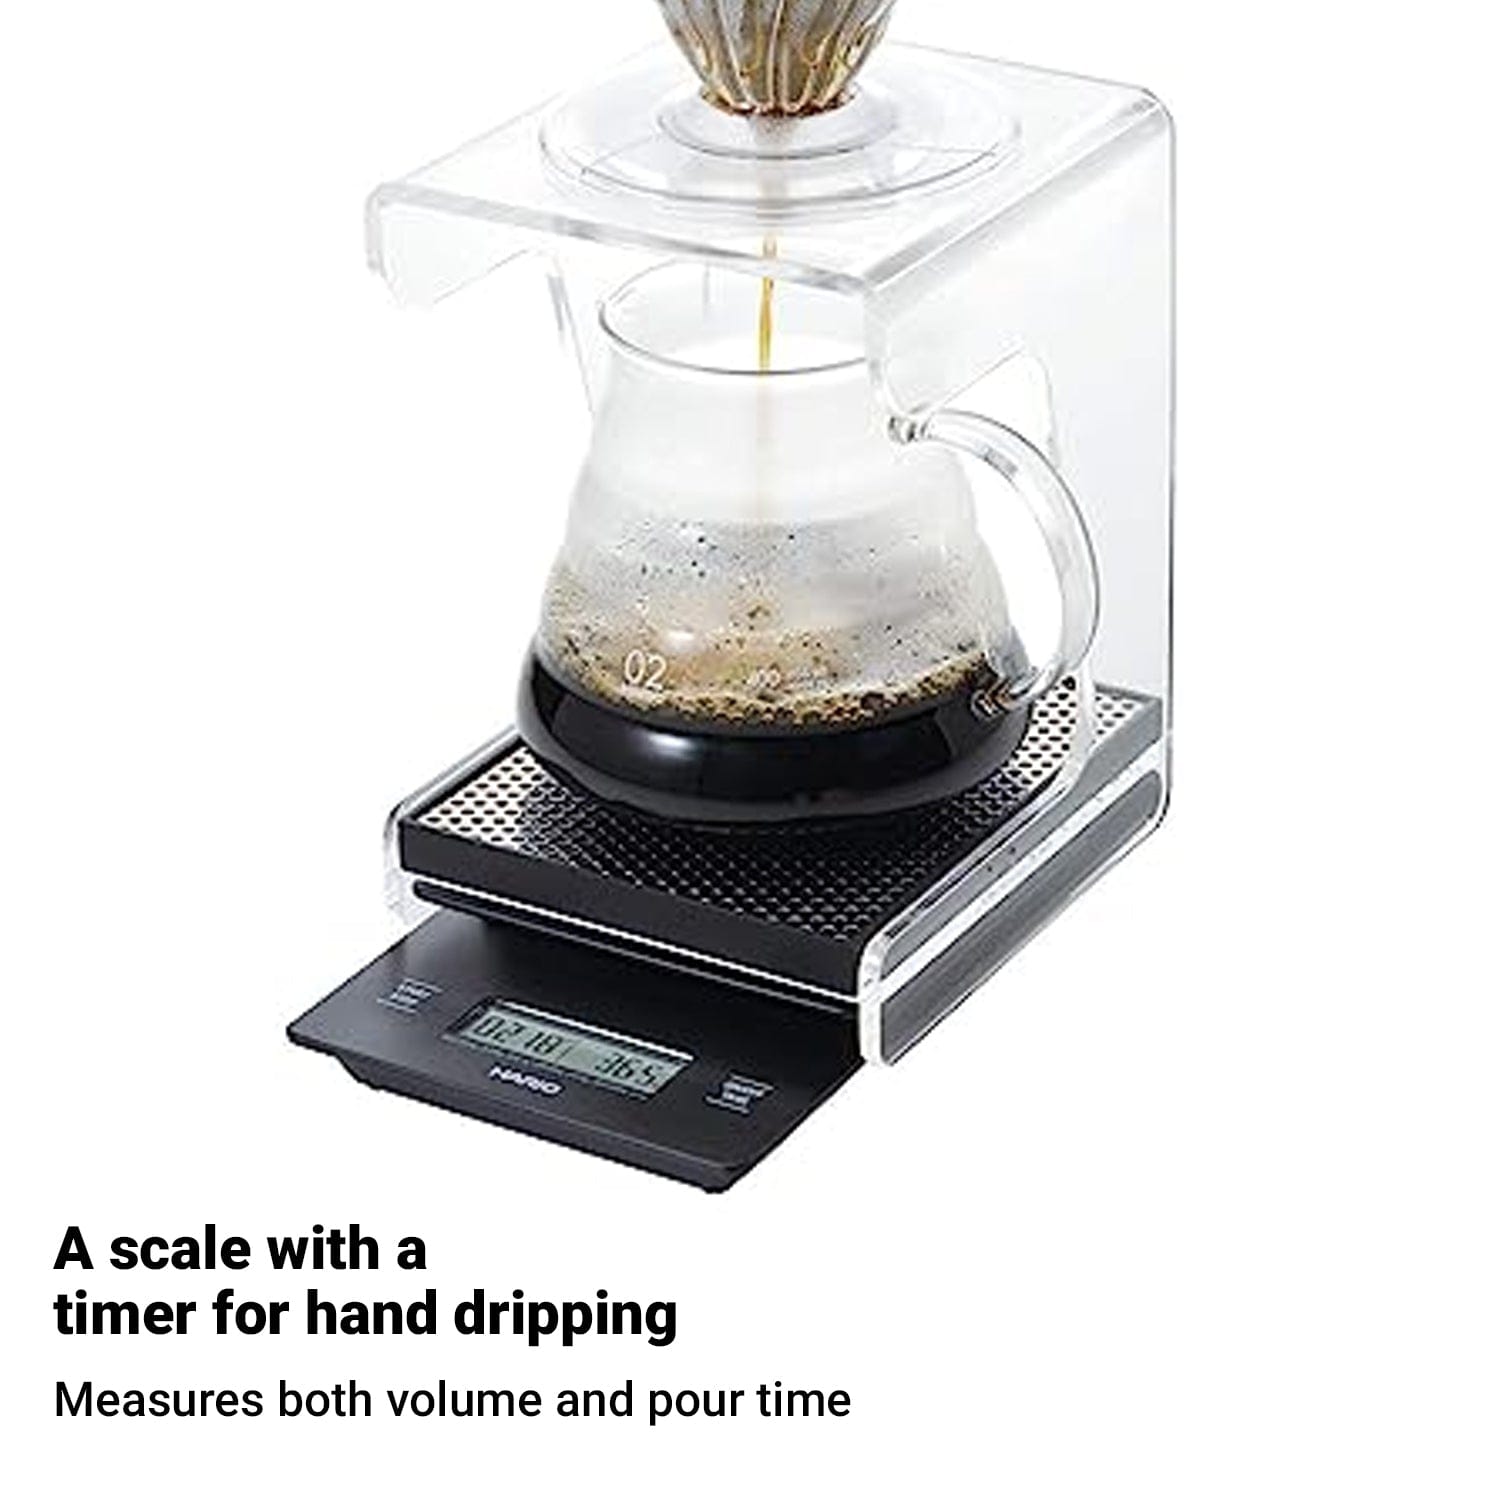 Hario Hario Drip scale for espresso and Manual Brewing -  VSTN-2000B